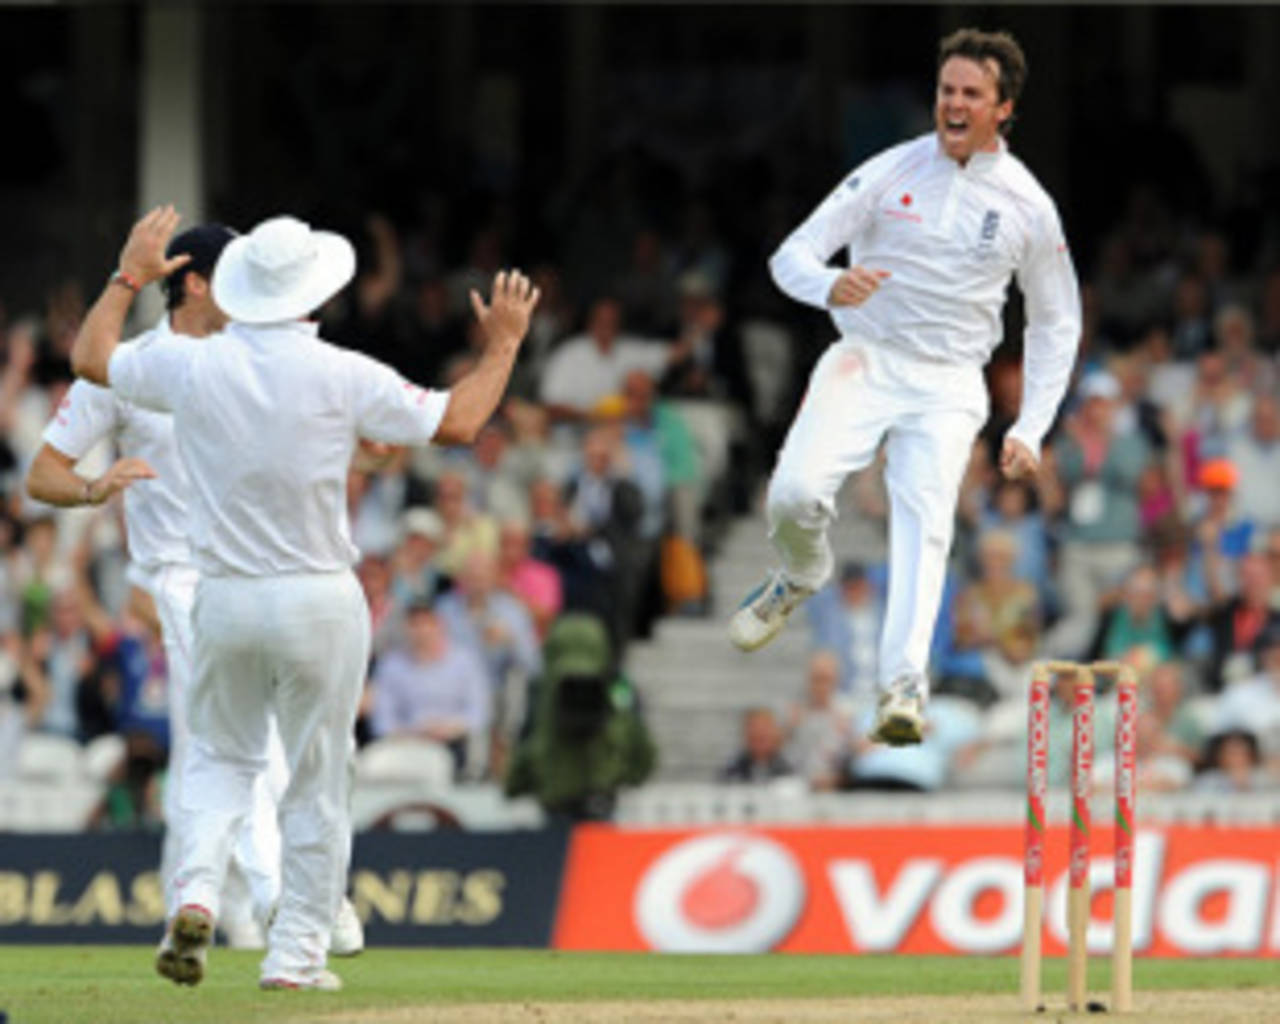 Jumping for joy: Graeme Swann dismisses Simon Katich, England v Australia, 5th Test, The Oval, 2nd day, August 21, 2009